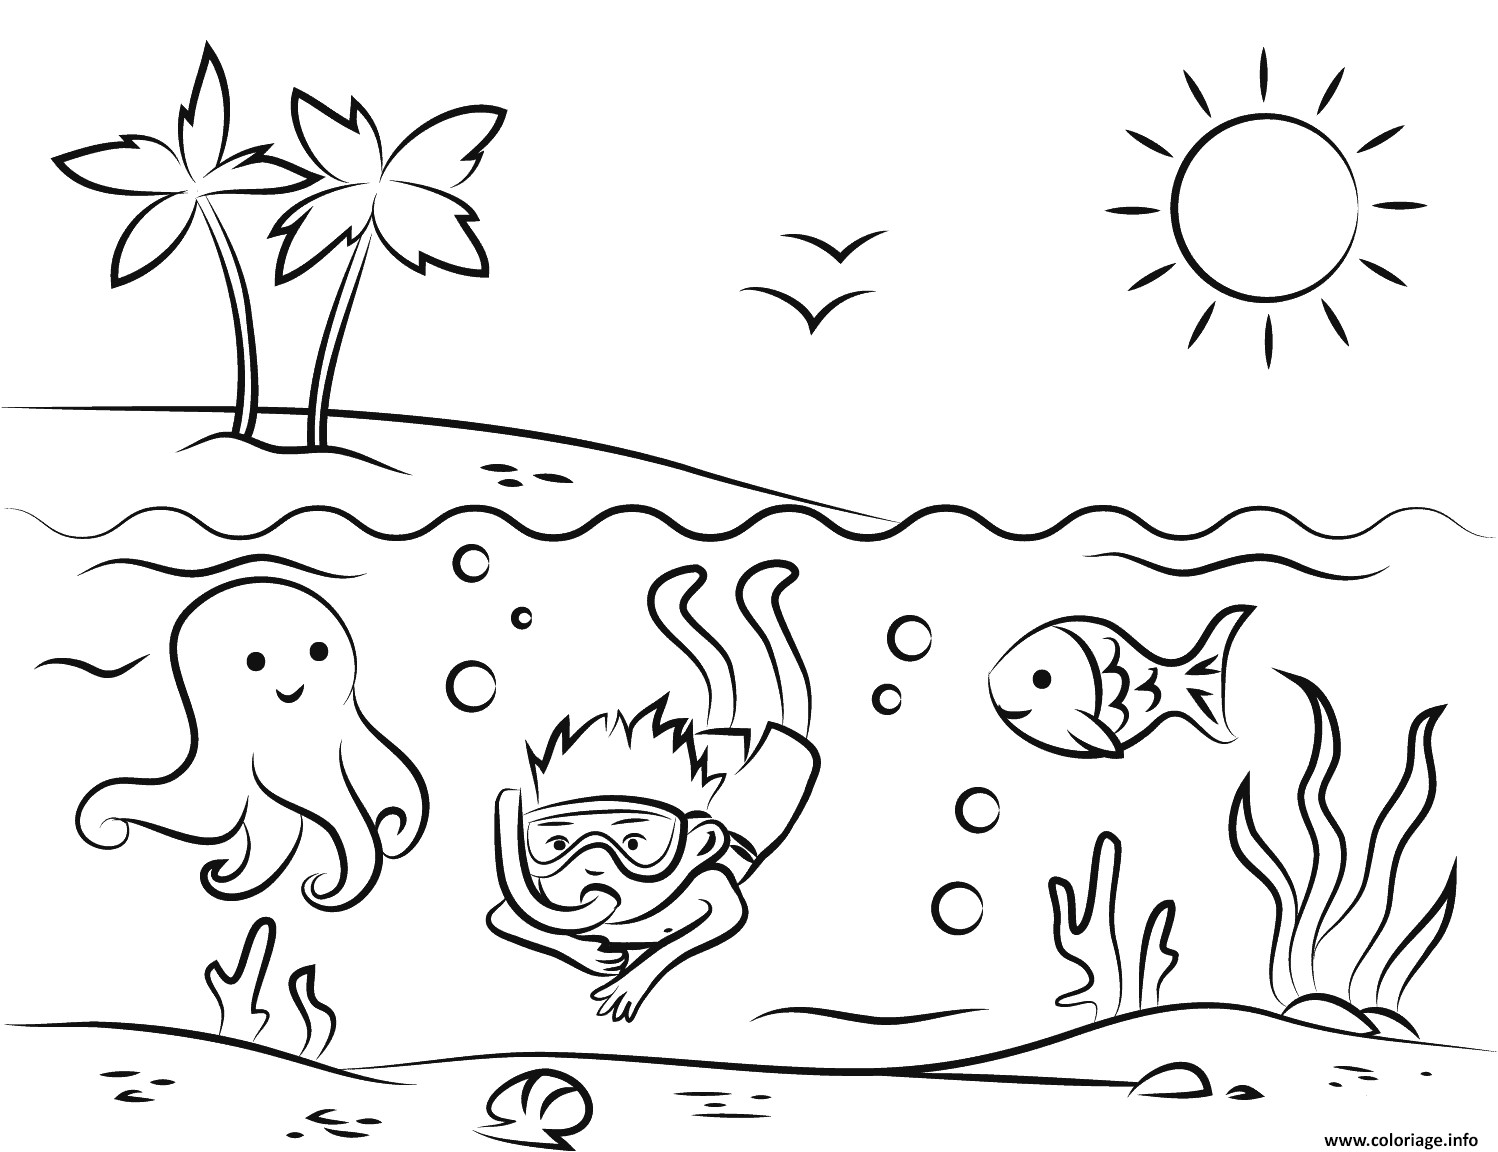 plage tropicale garcon nage poisson soleil vacance coloriage dessin